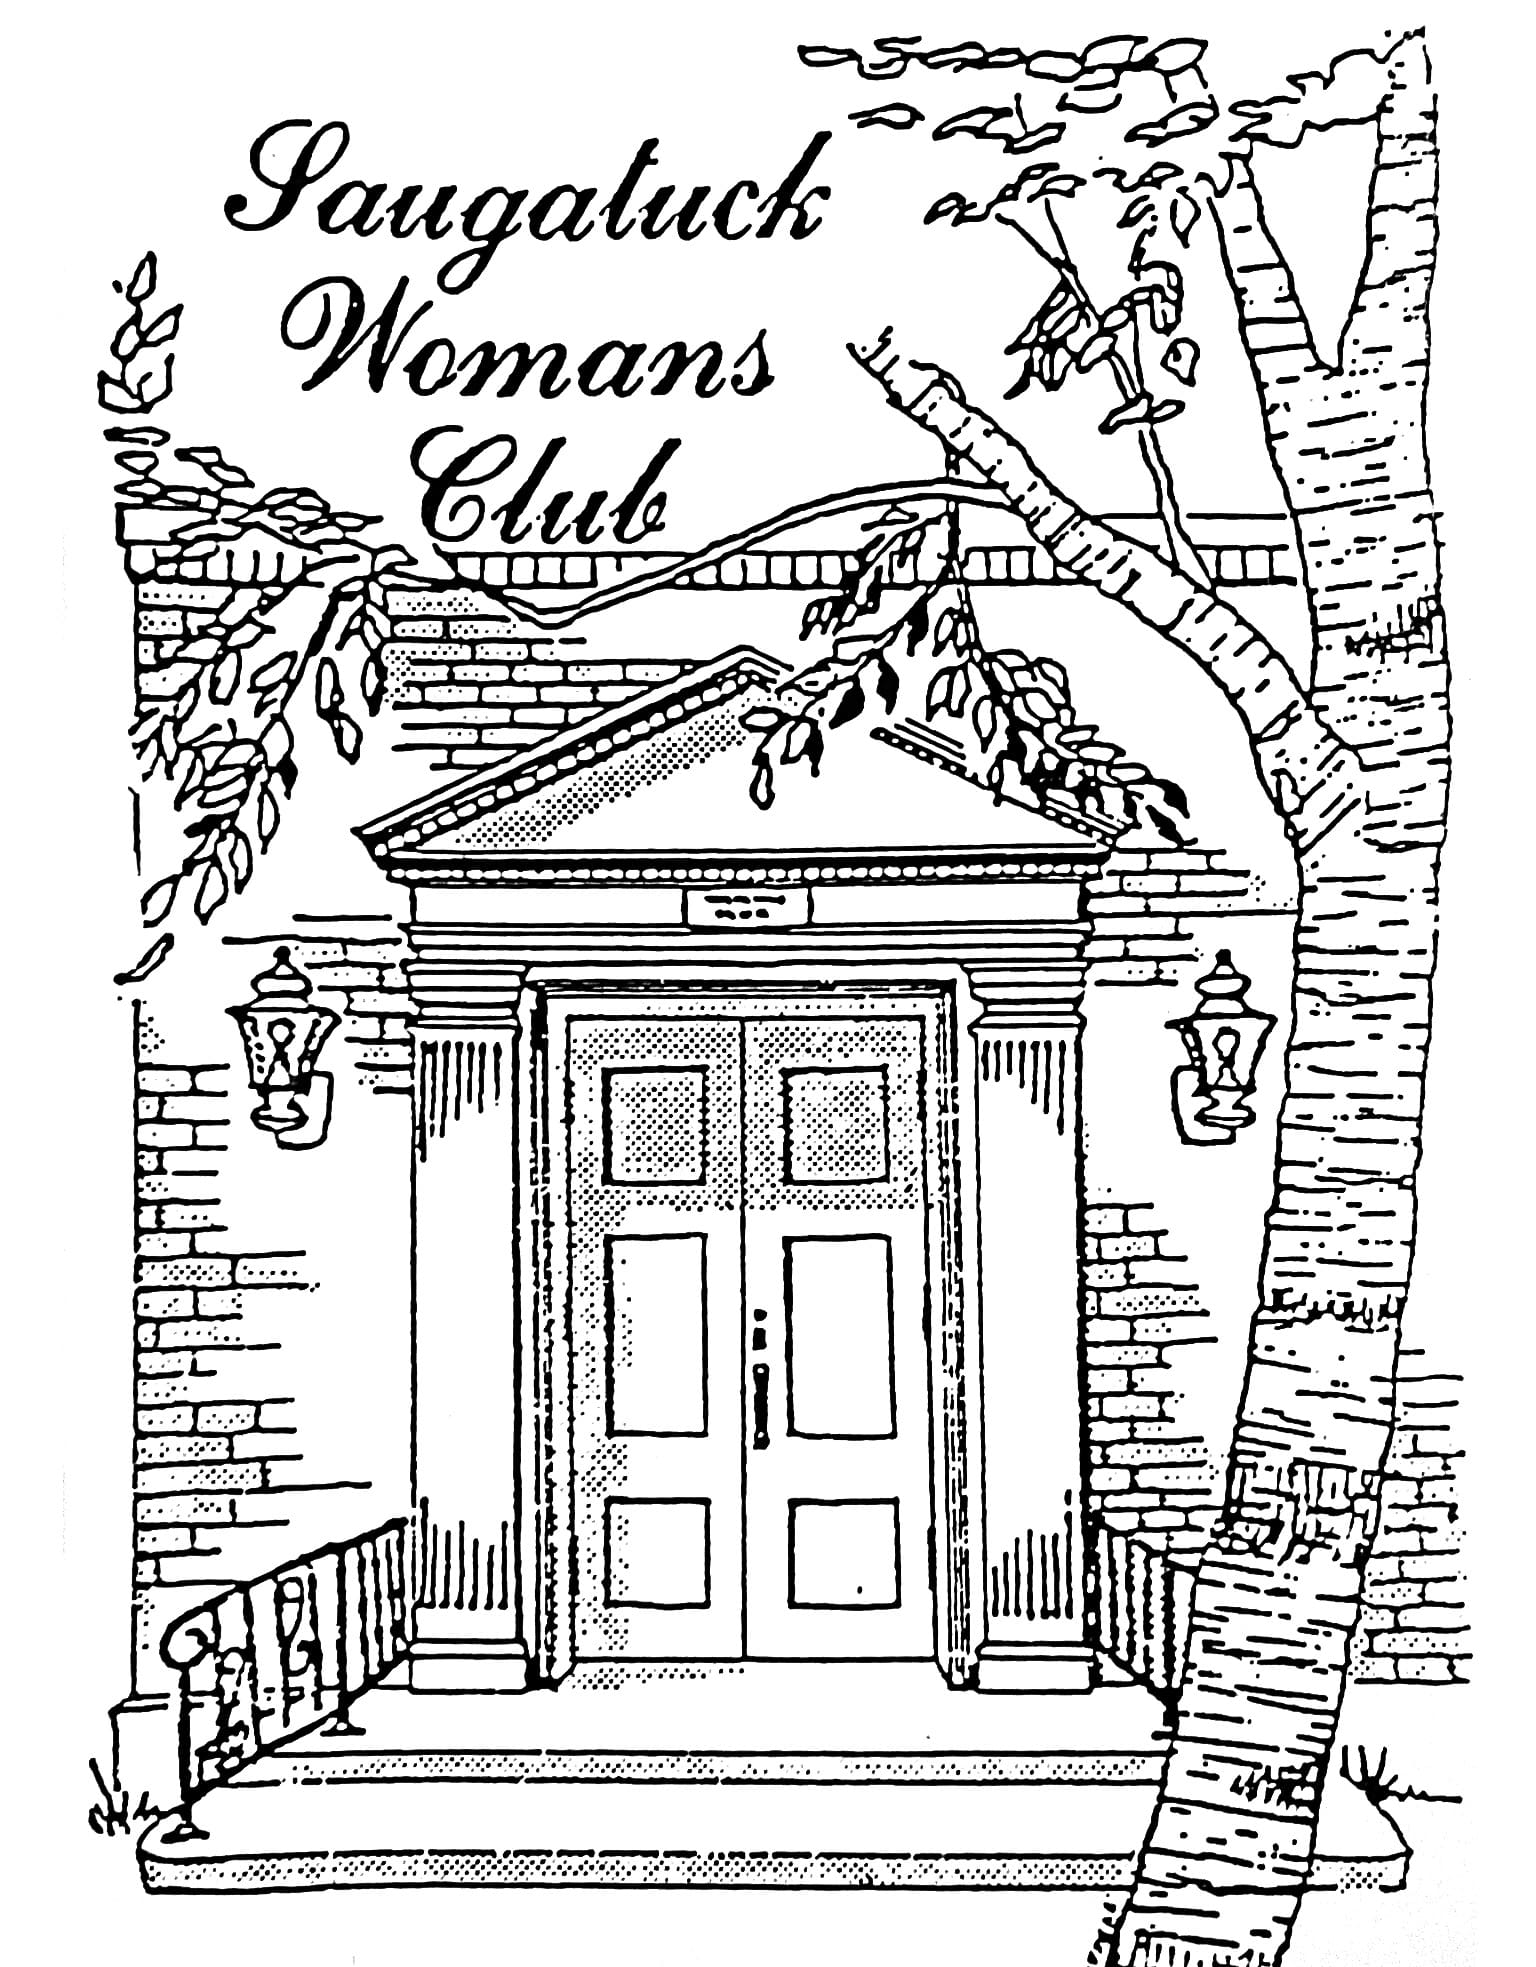 Saugatuck Womans Club drawing